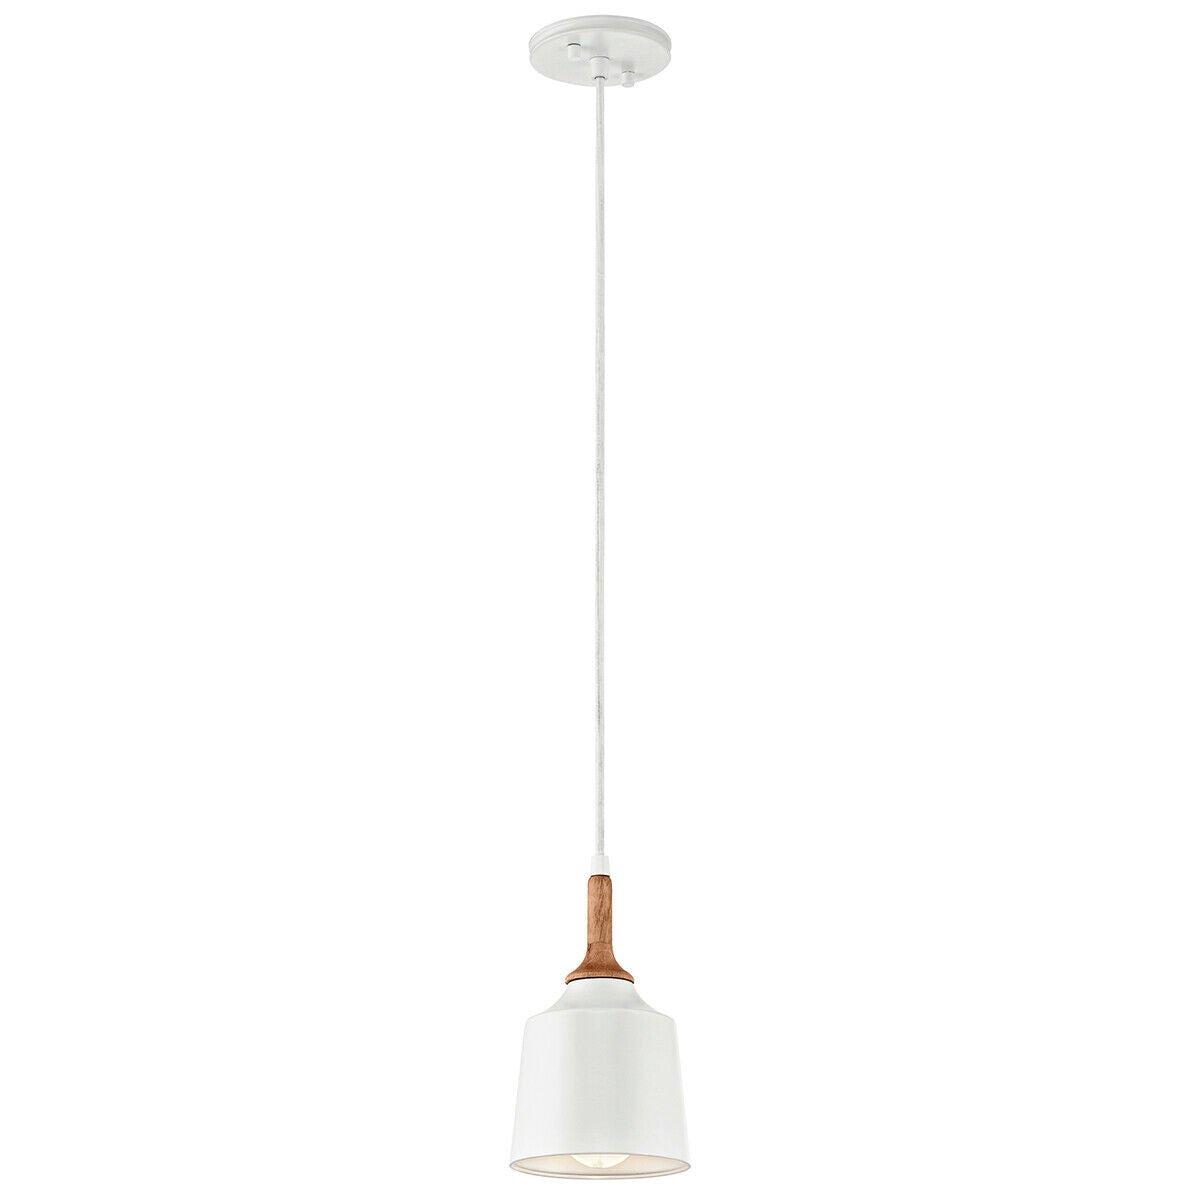 1 Bulb Ceiling Pendant Light Fitting White LED E27 60W Bulb